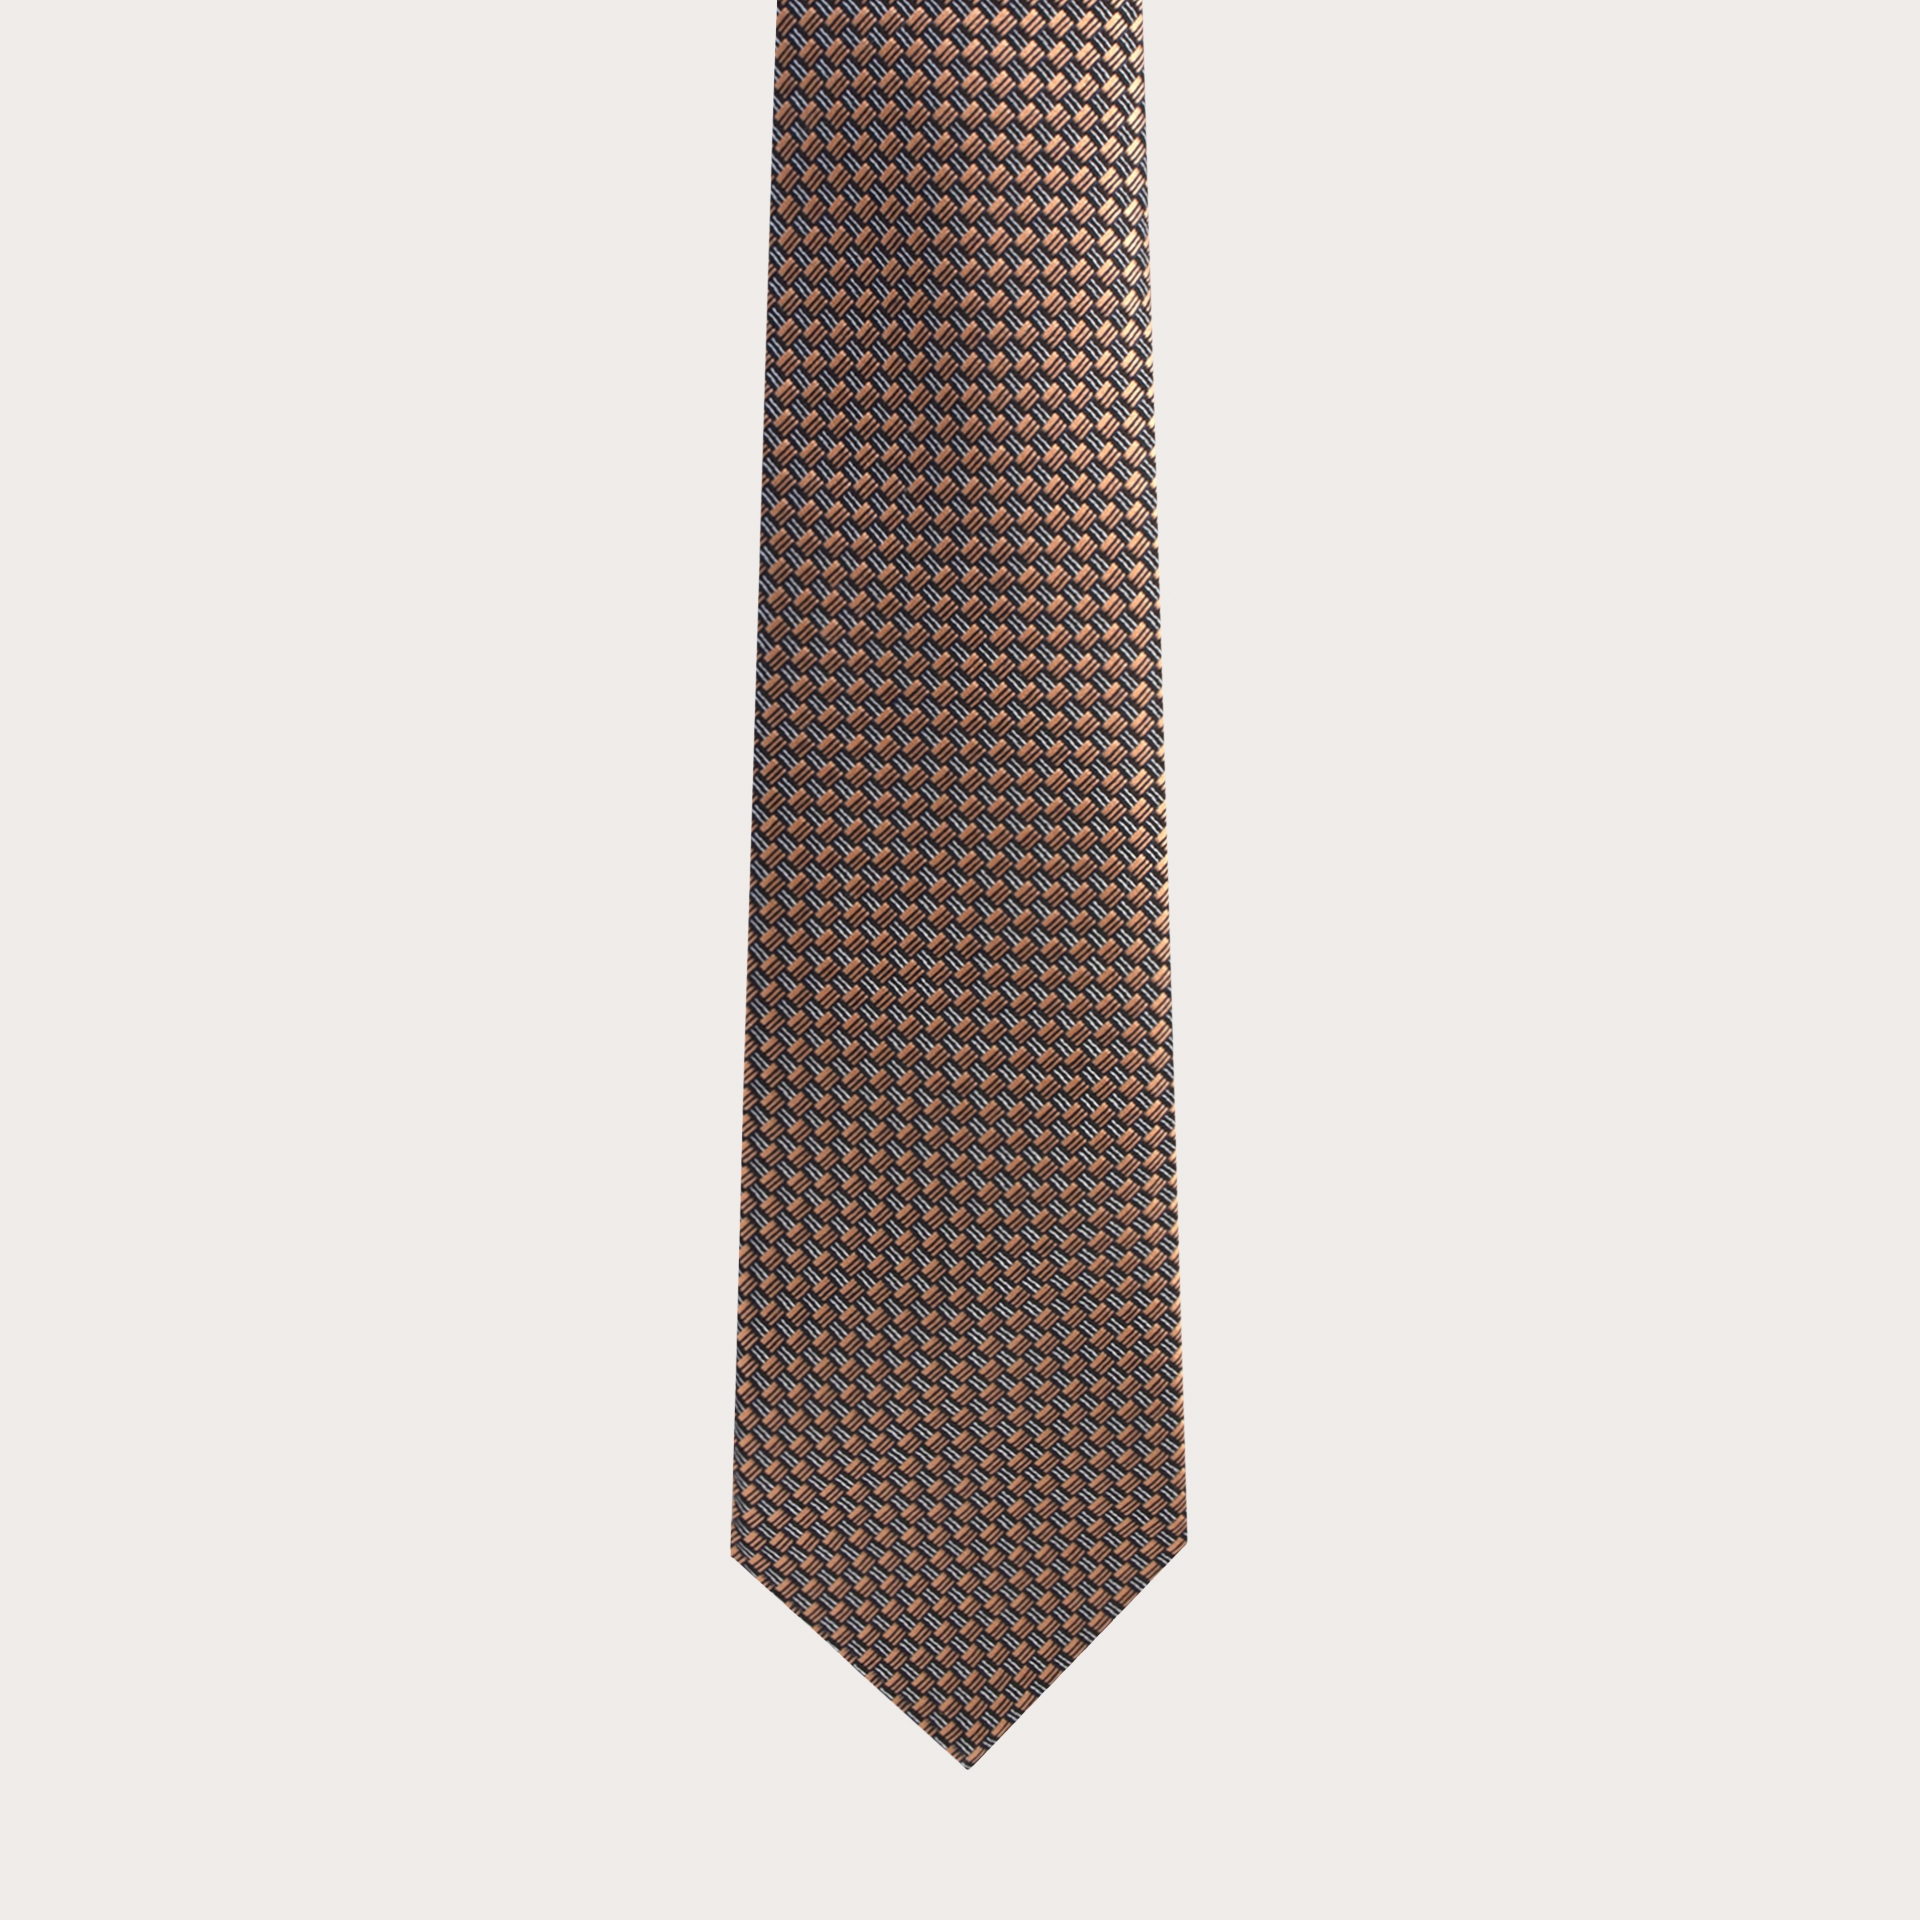 BRUCLE Elegante Krawatte aus Jacquard-Seide, bronzefarbenes Muster